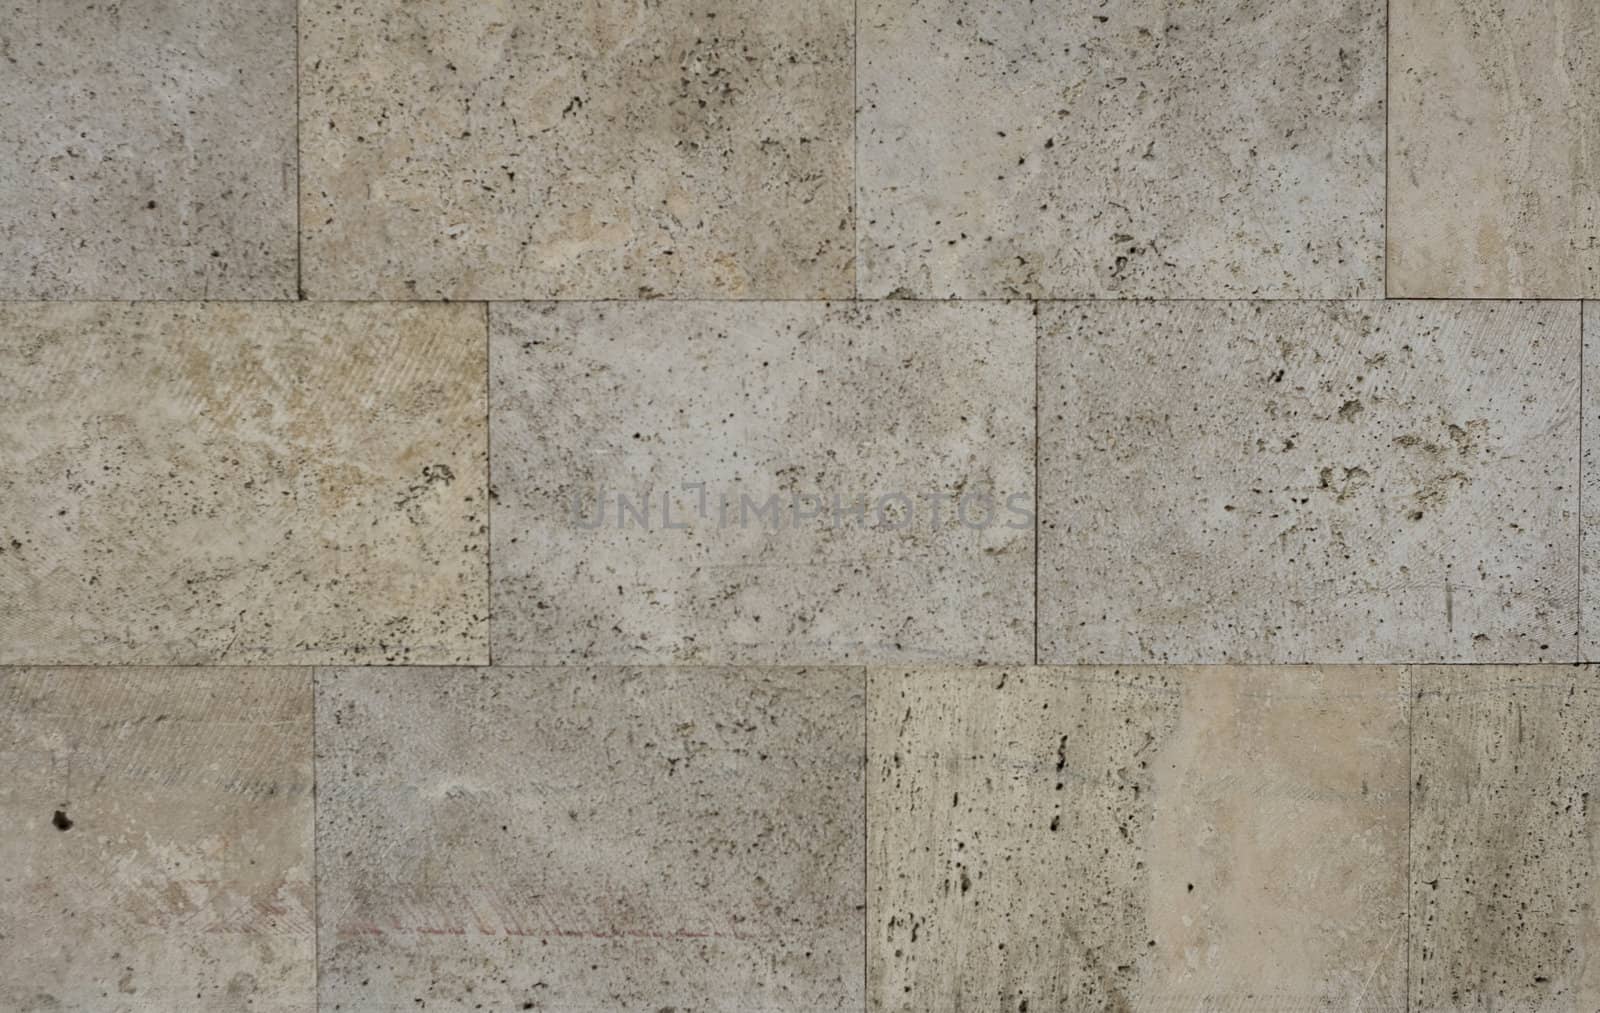 Granite wall texture by ursolv